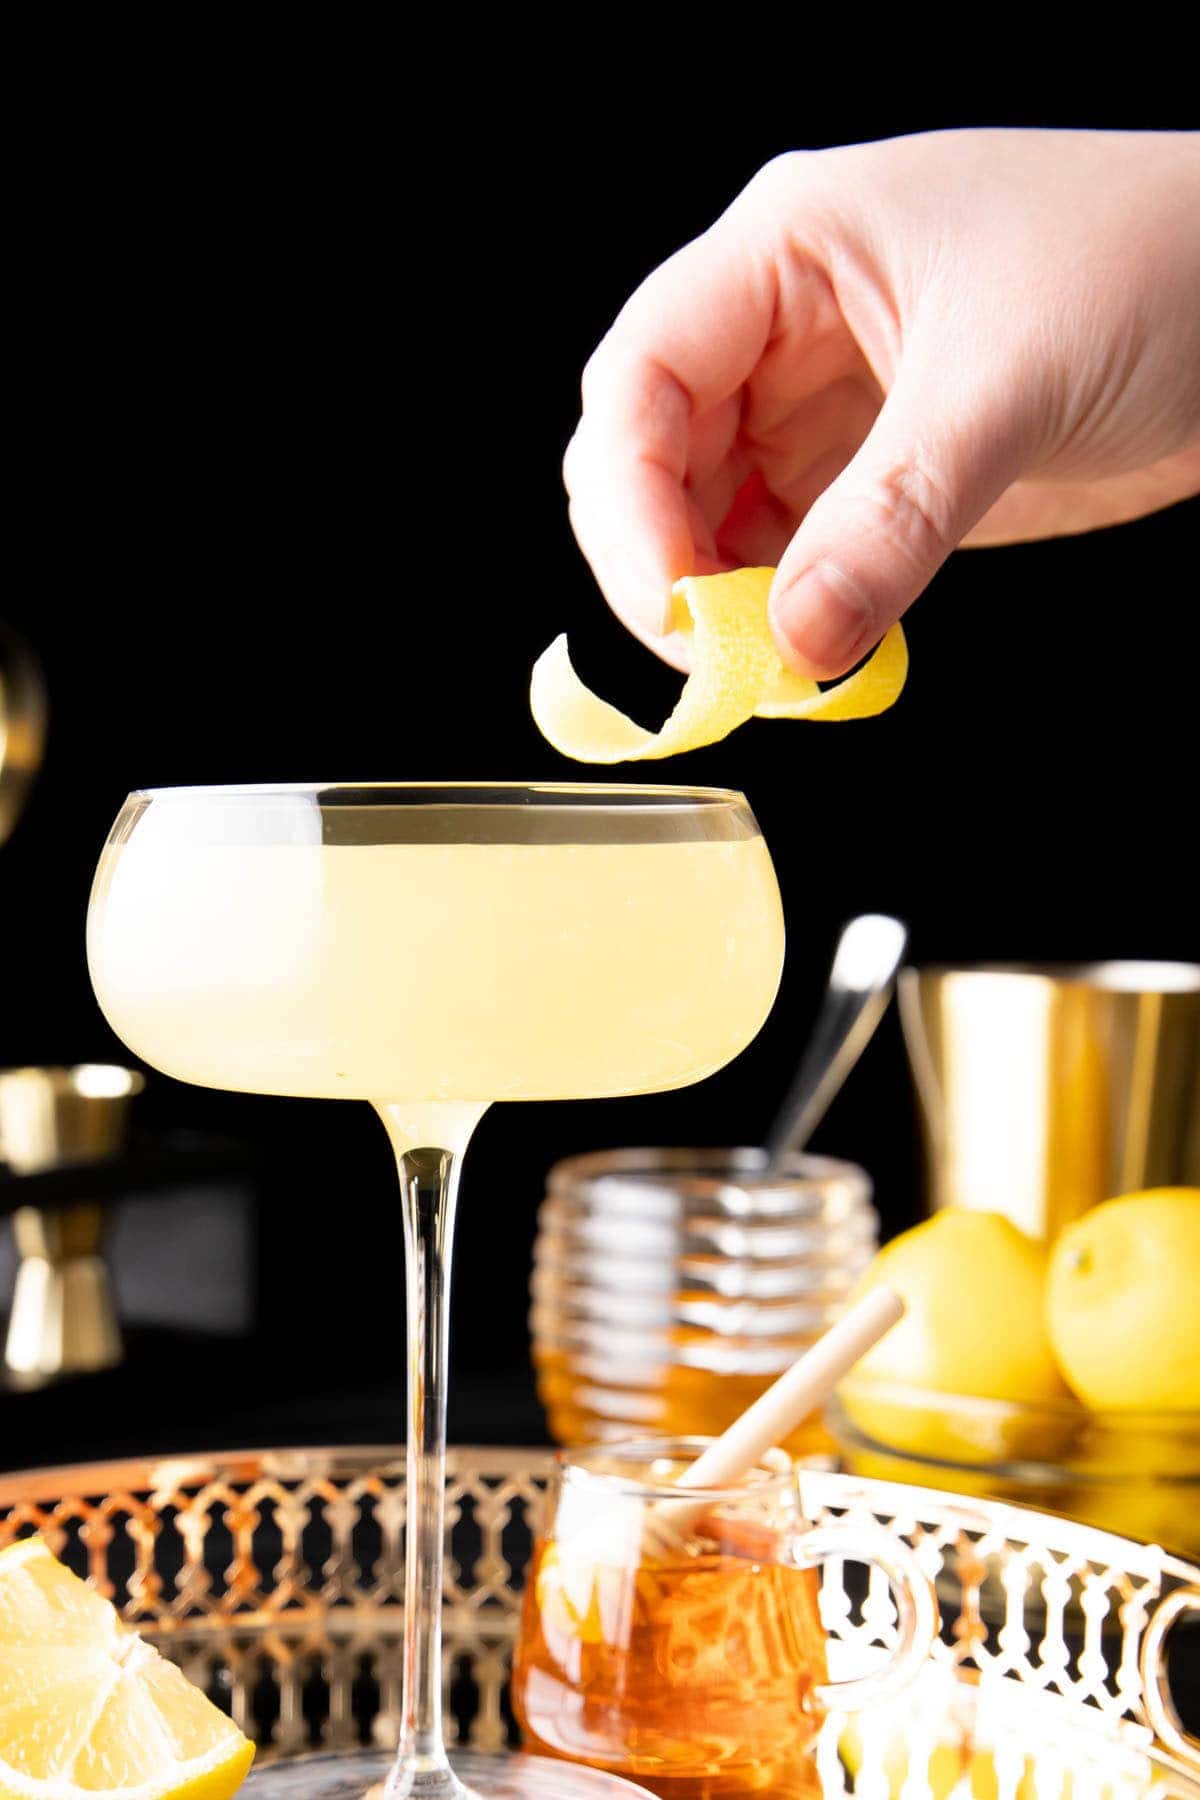 Adding lemon garnish onto the rim of this drink recipe